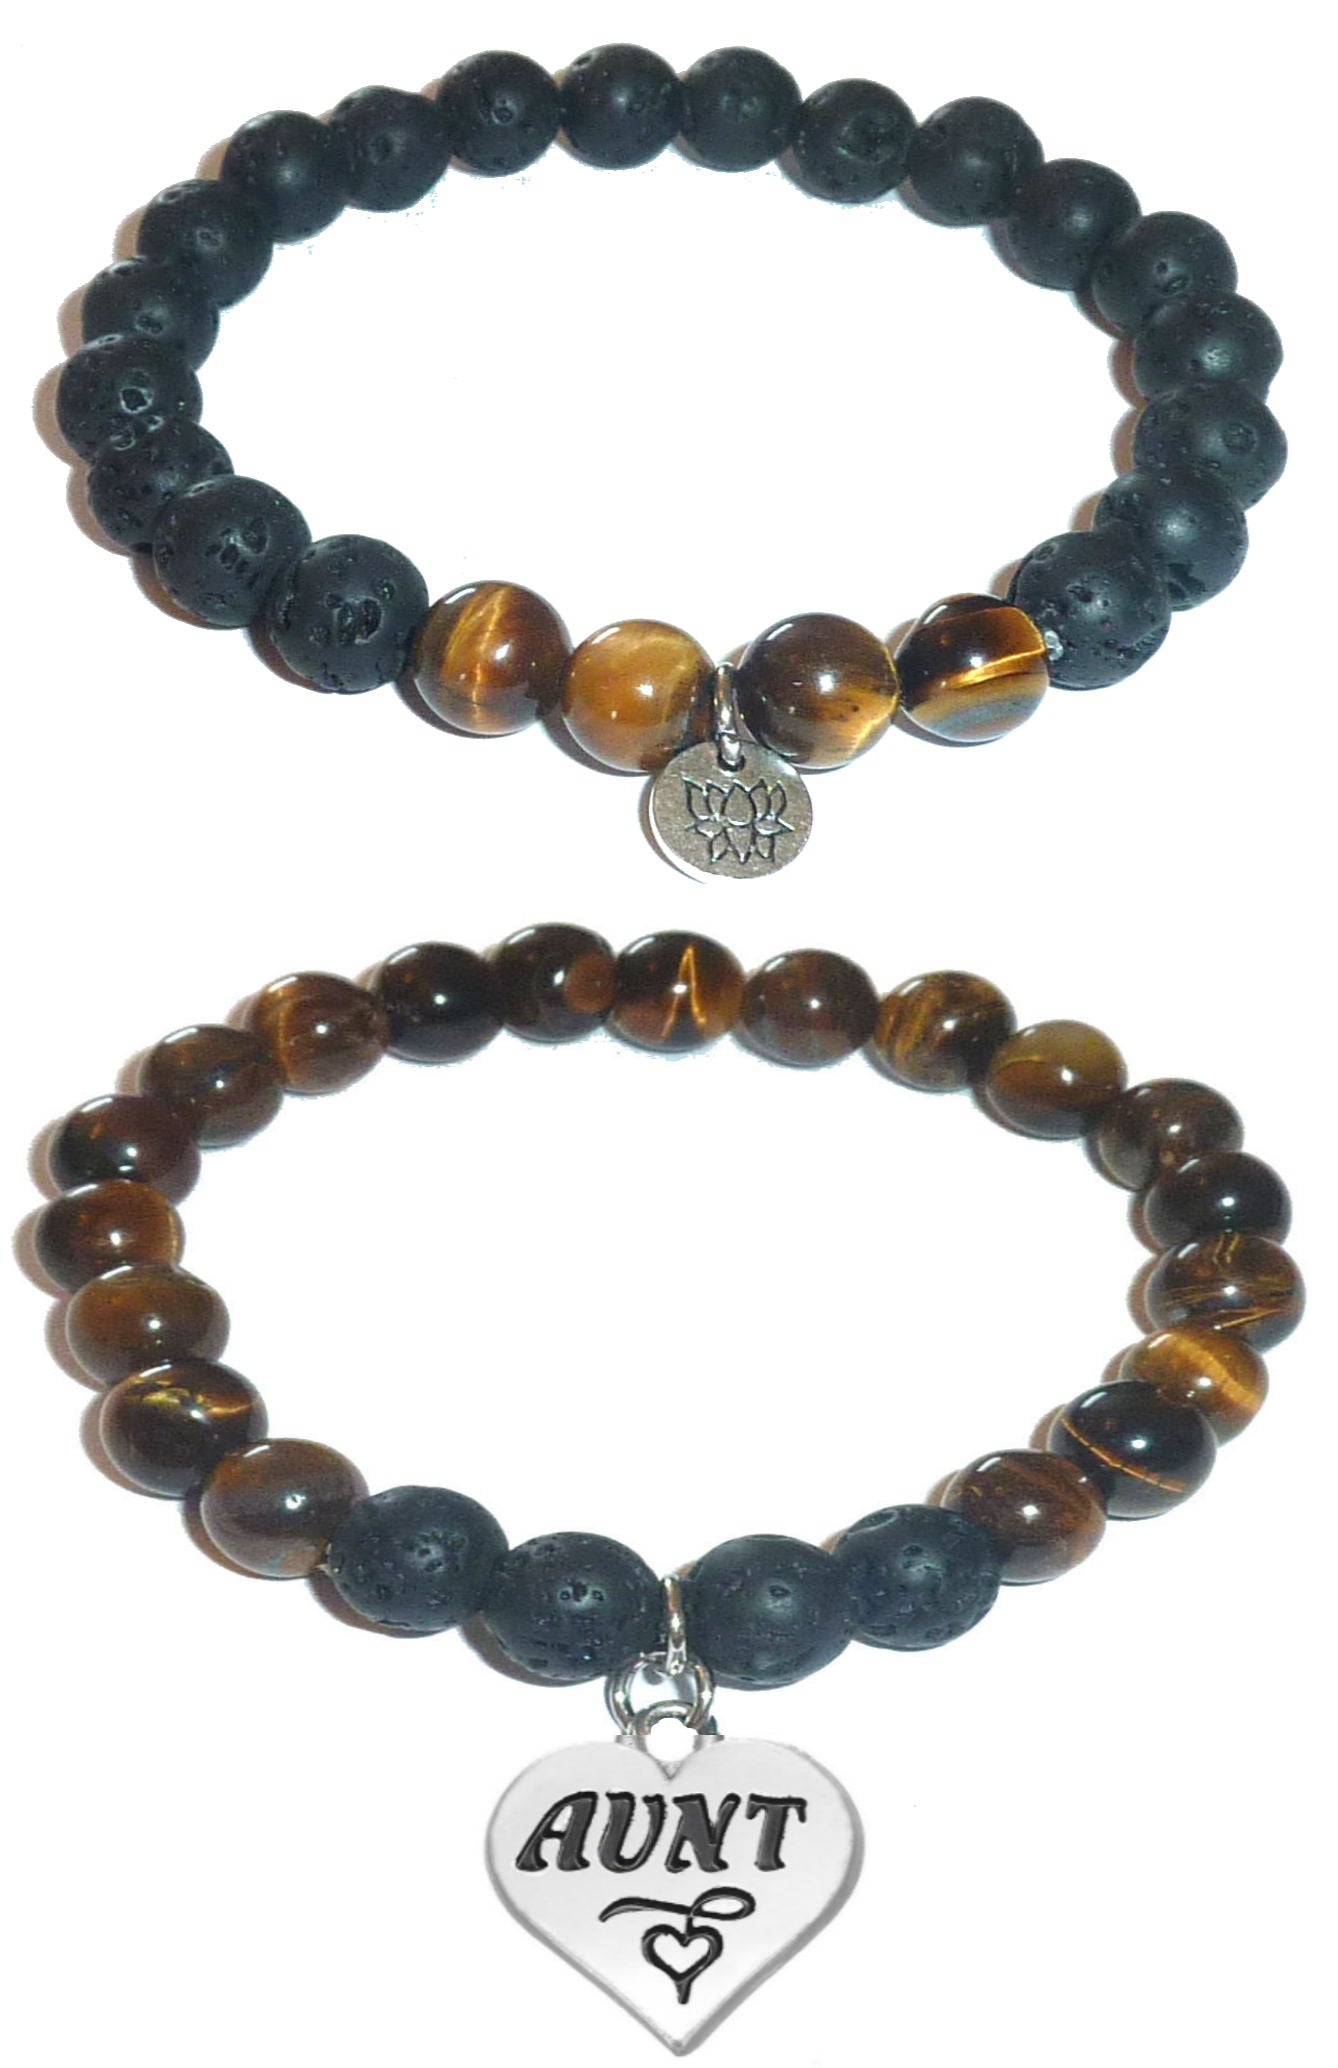 Aunt - Women's Tiger Eye & Black Lava Diffuser Yoga Beads Charm Stretch Bracelet Gift Set